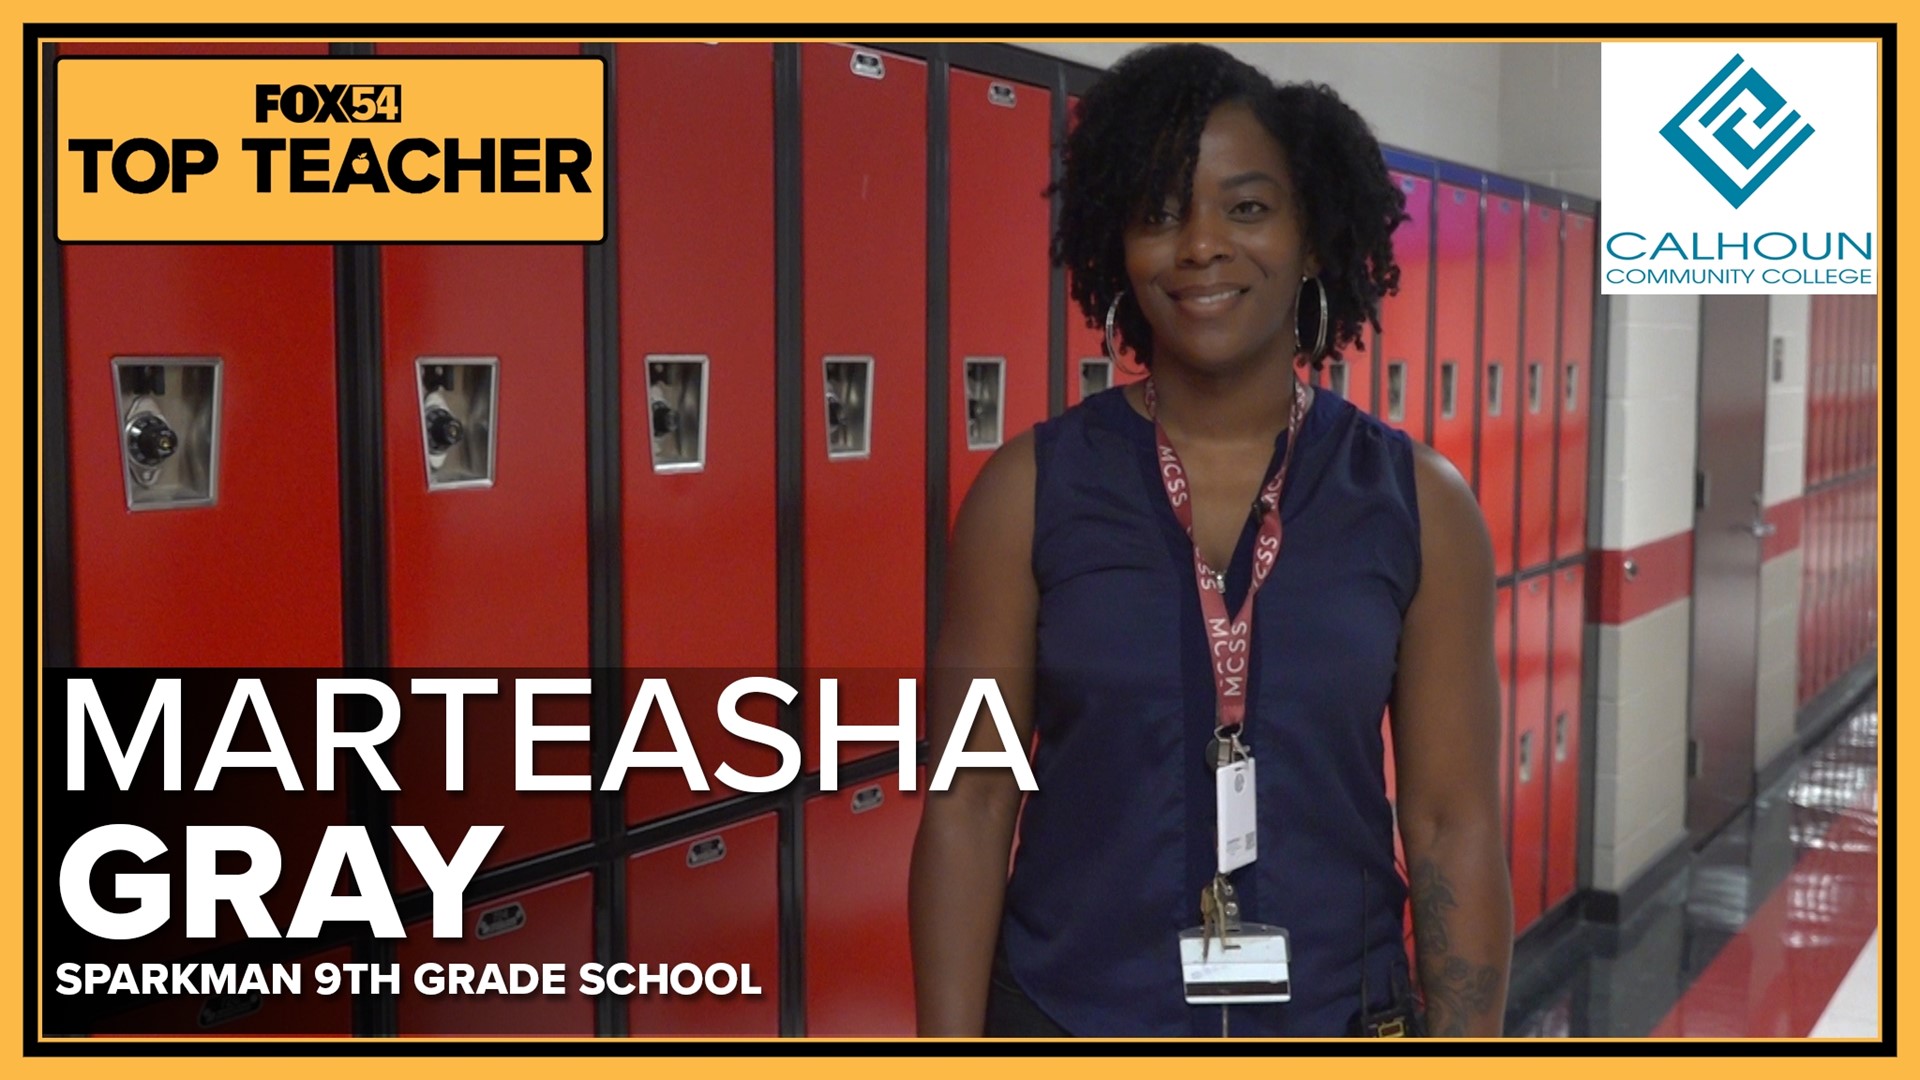 Marteasha Gray is a geometry teacher.